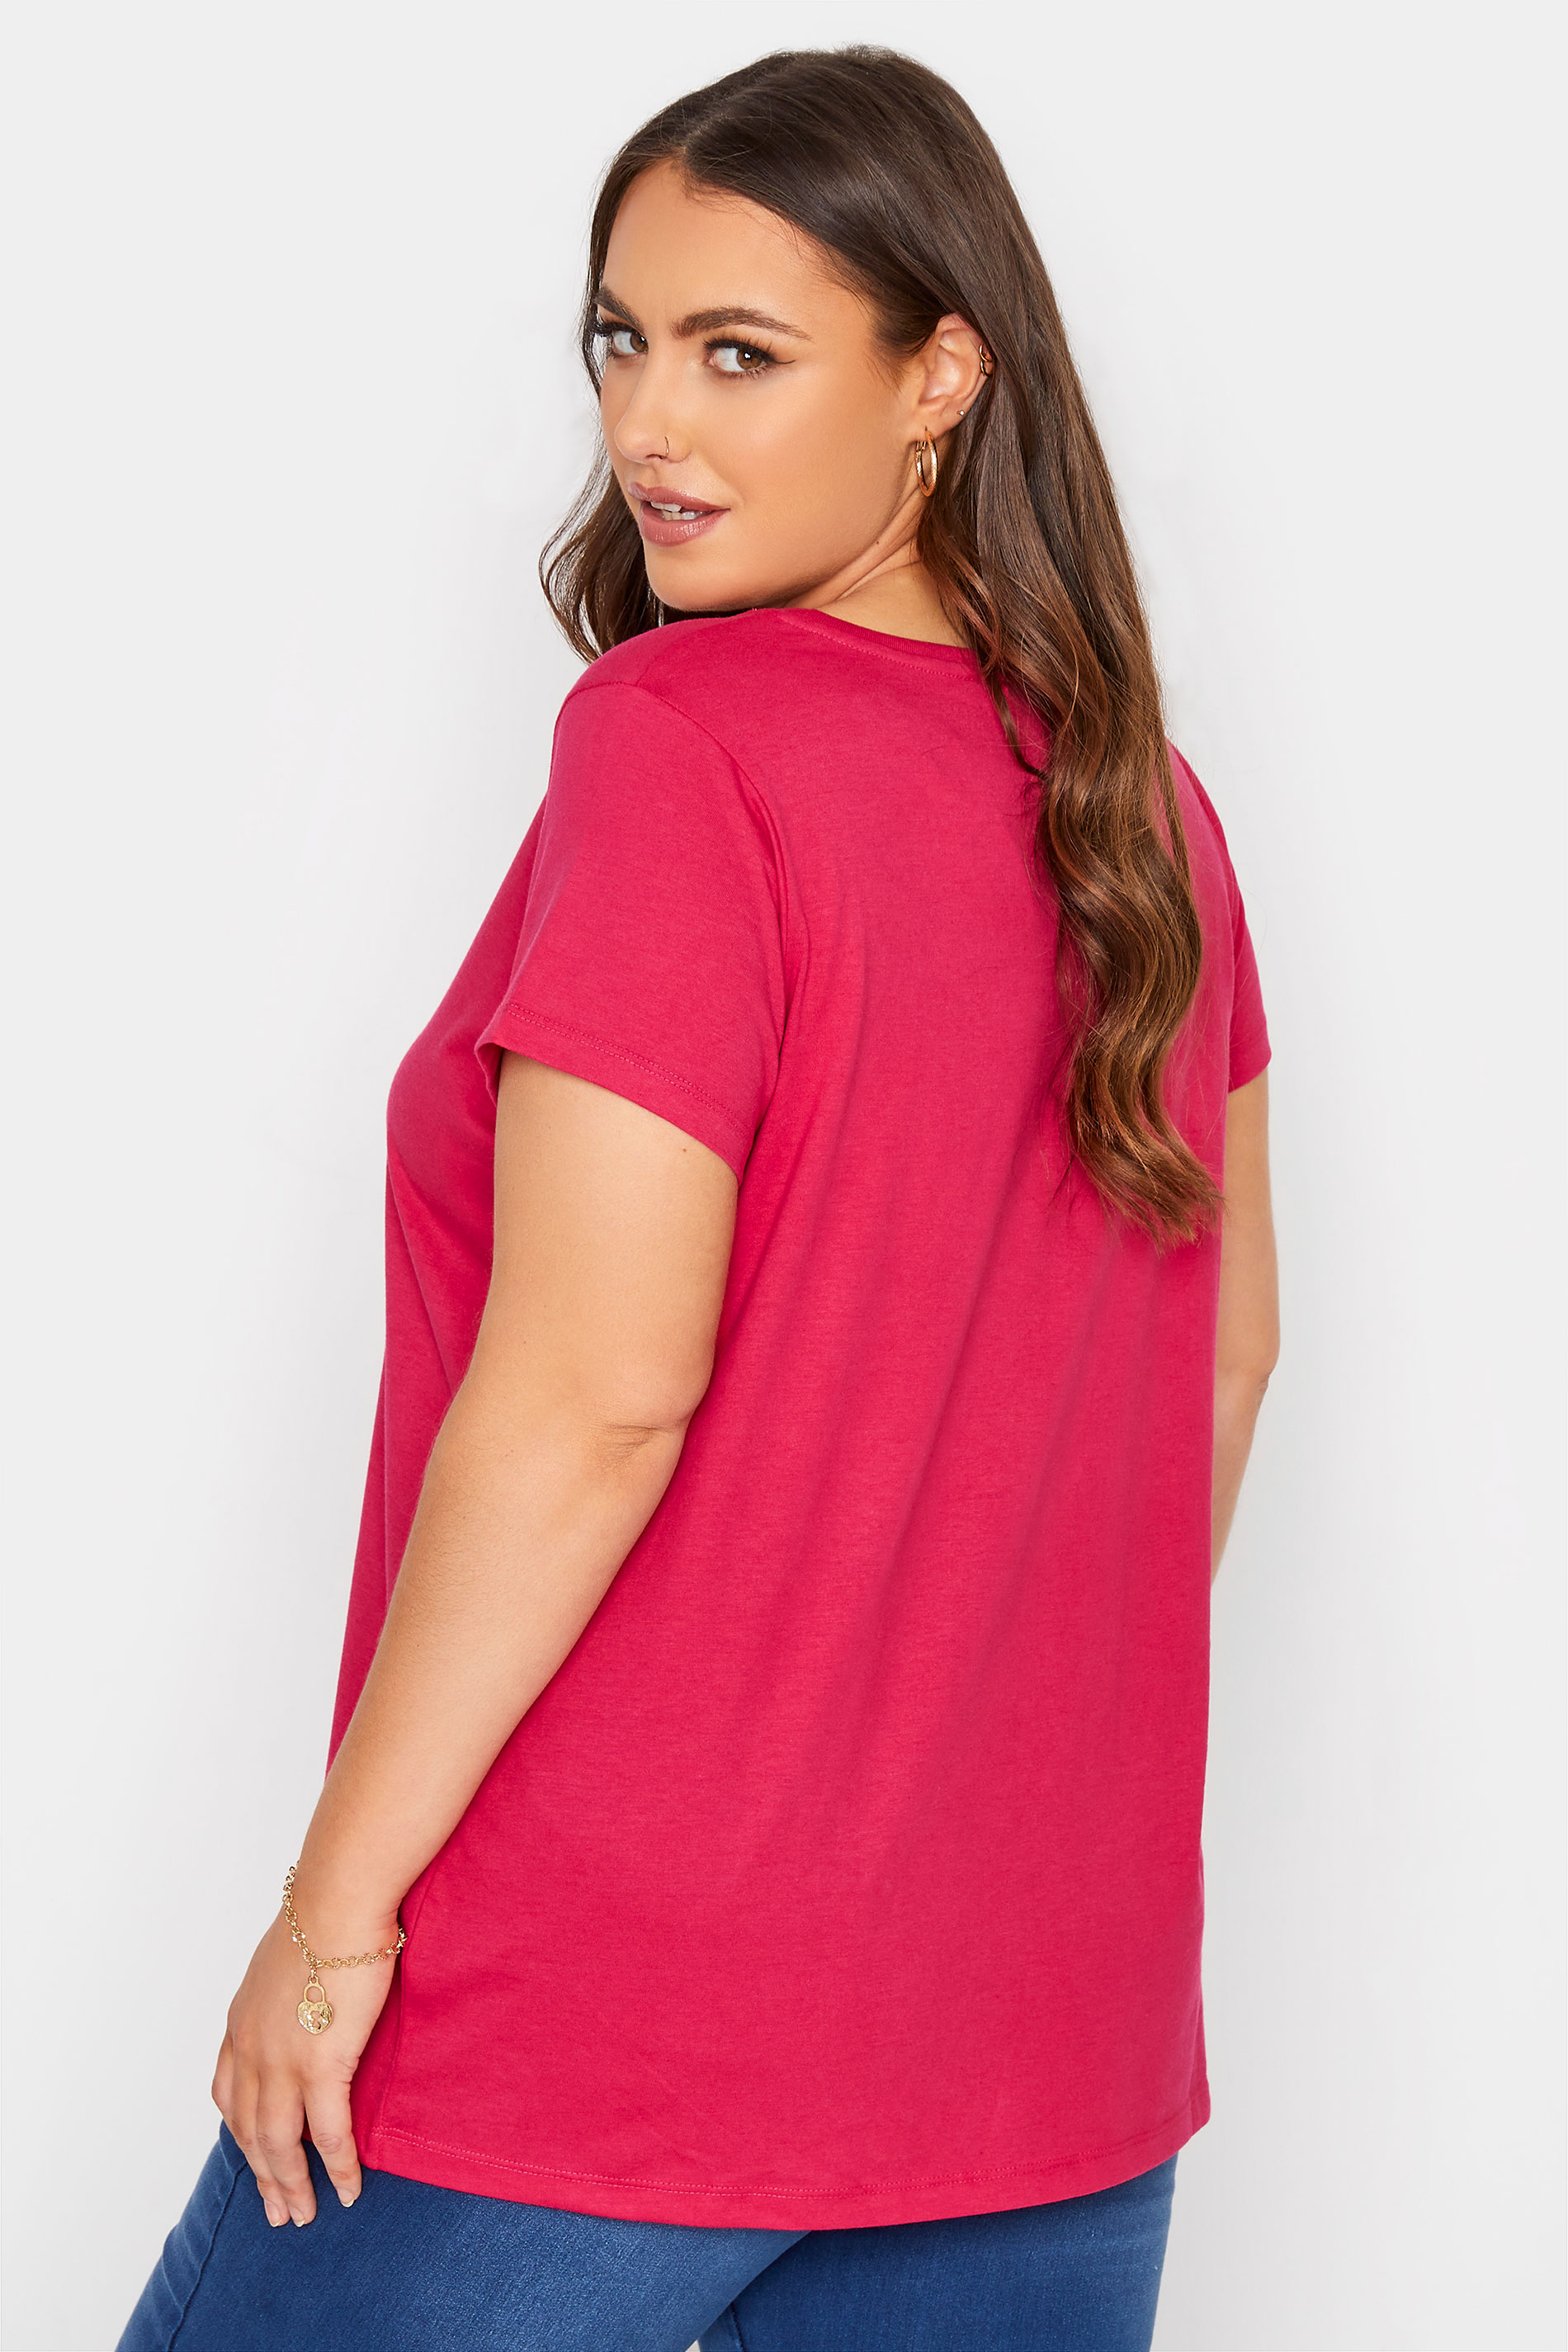 Grande taille  Tops Grande taille  T-Shirts Basiques & Débardeurs | T-Shirt Rose Flashy en Jersey - KL13116